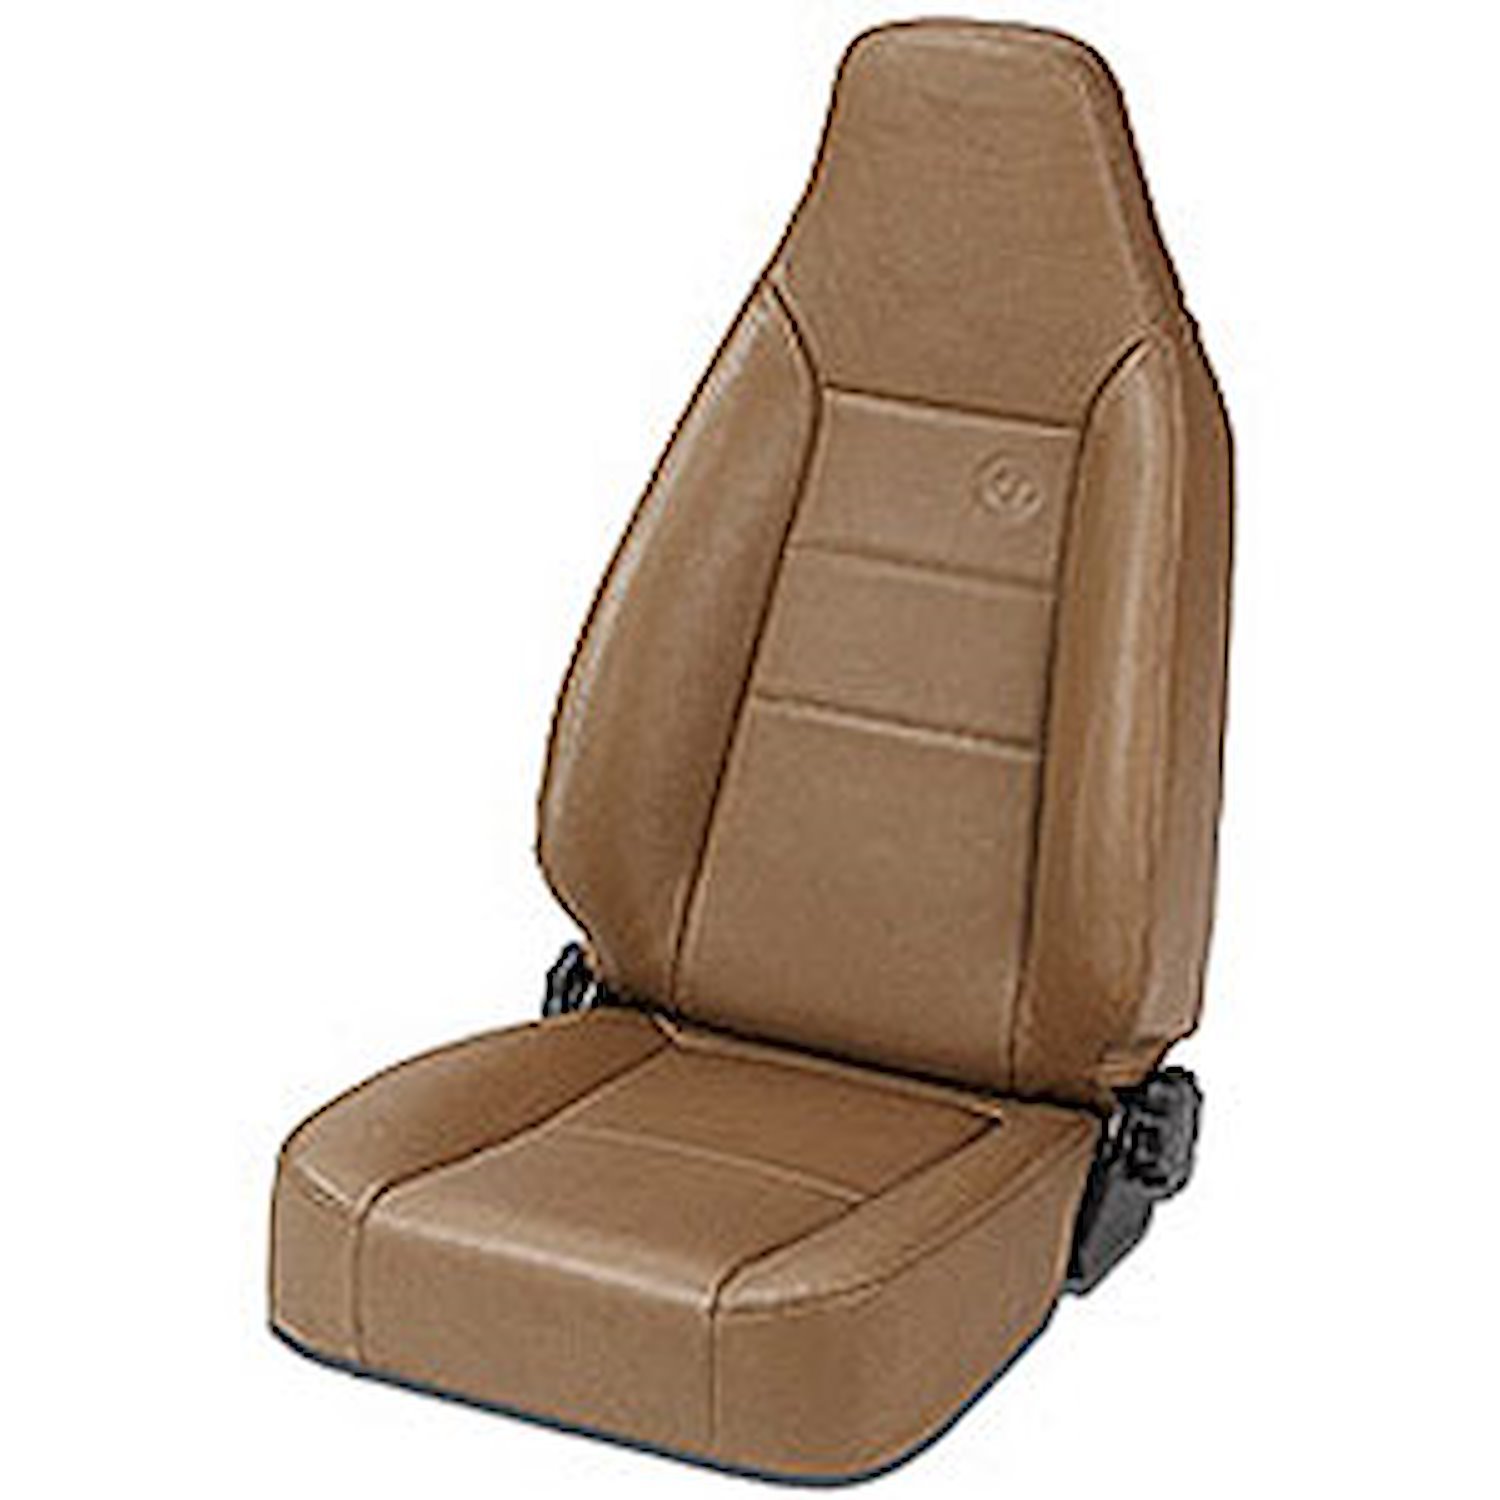 Trailmax II Sport Seat, Spice, Front, High-Back, Vinyl, Bucket, Driver Or Passenger Side